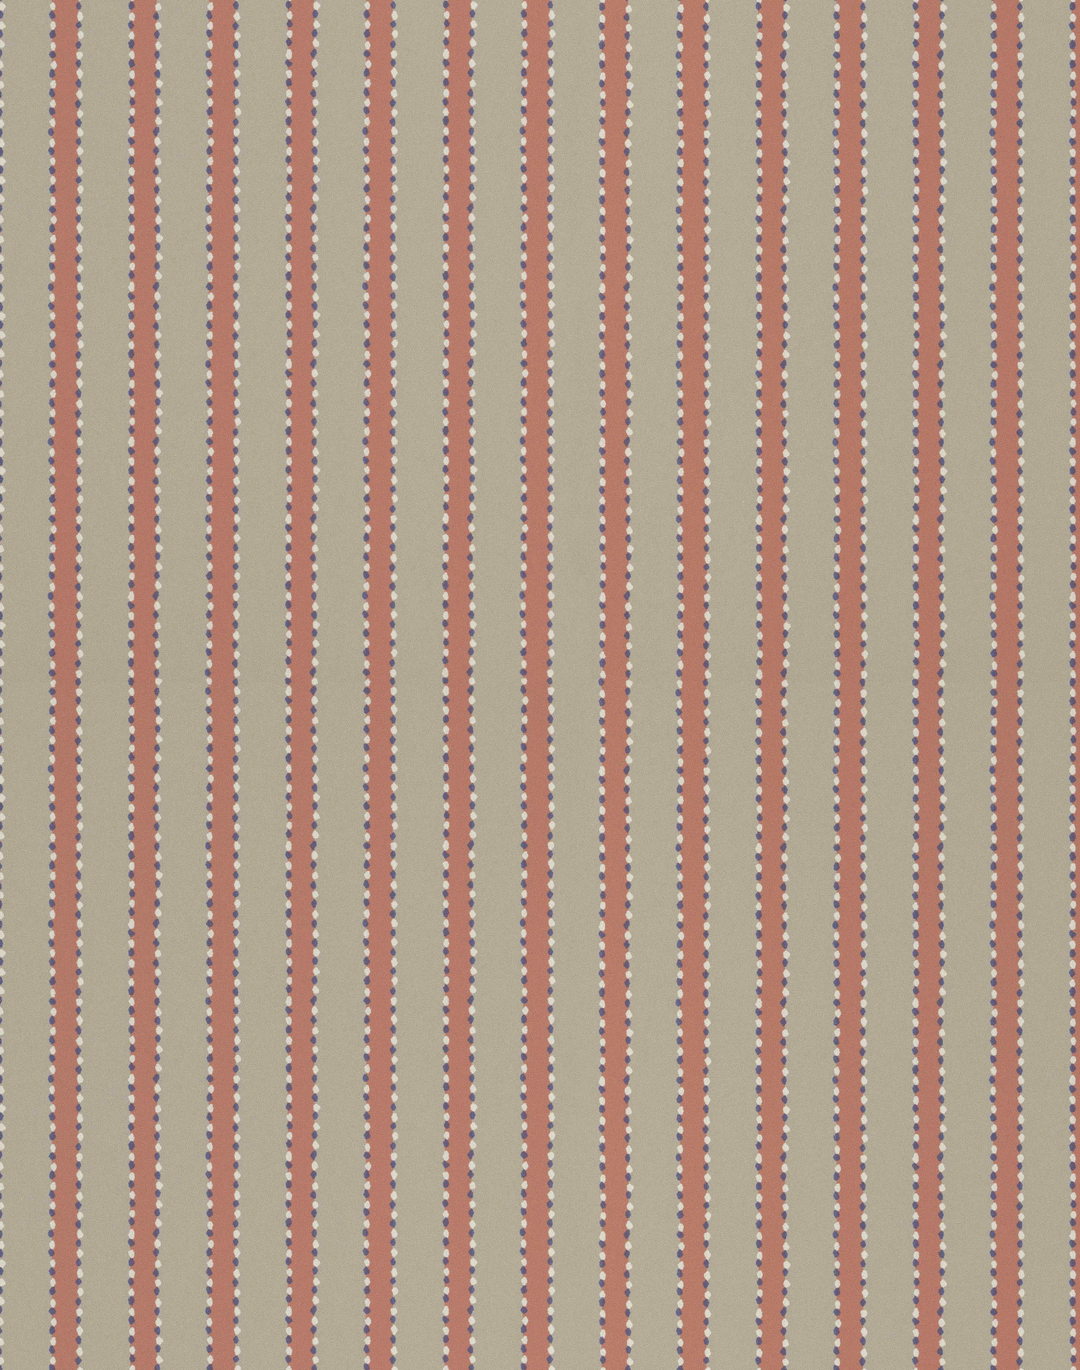 Stitched Stripe, Coral